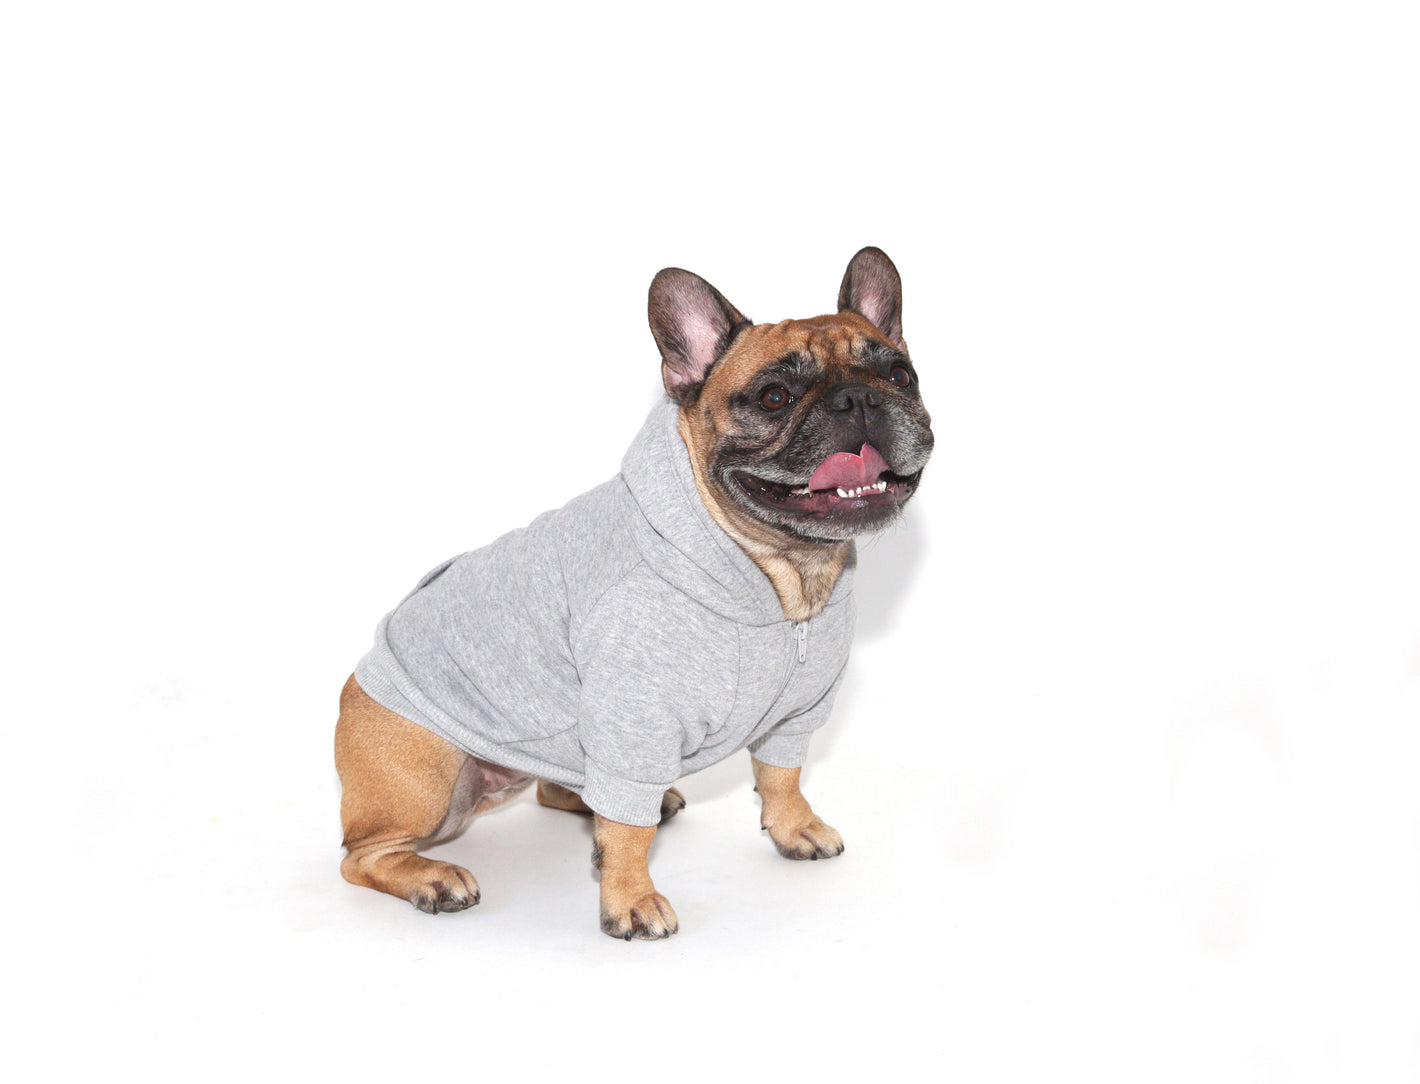 The sweatshirt dog pet sweatshirt in grey heather in medium worn by Winnie the french bulldog